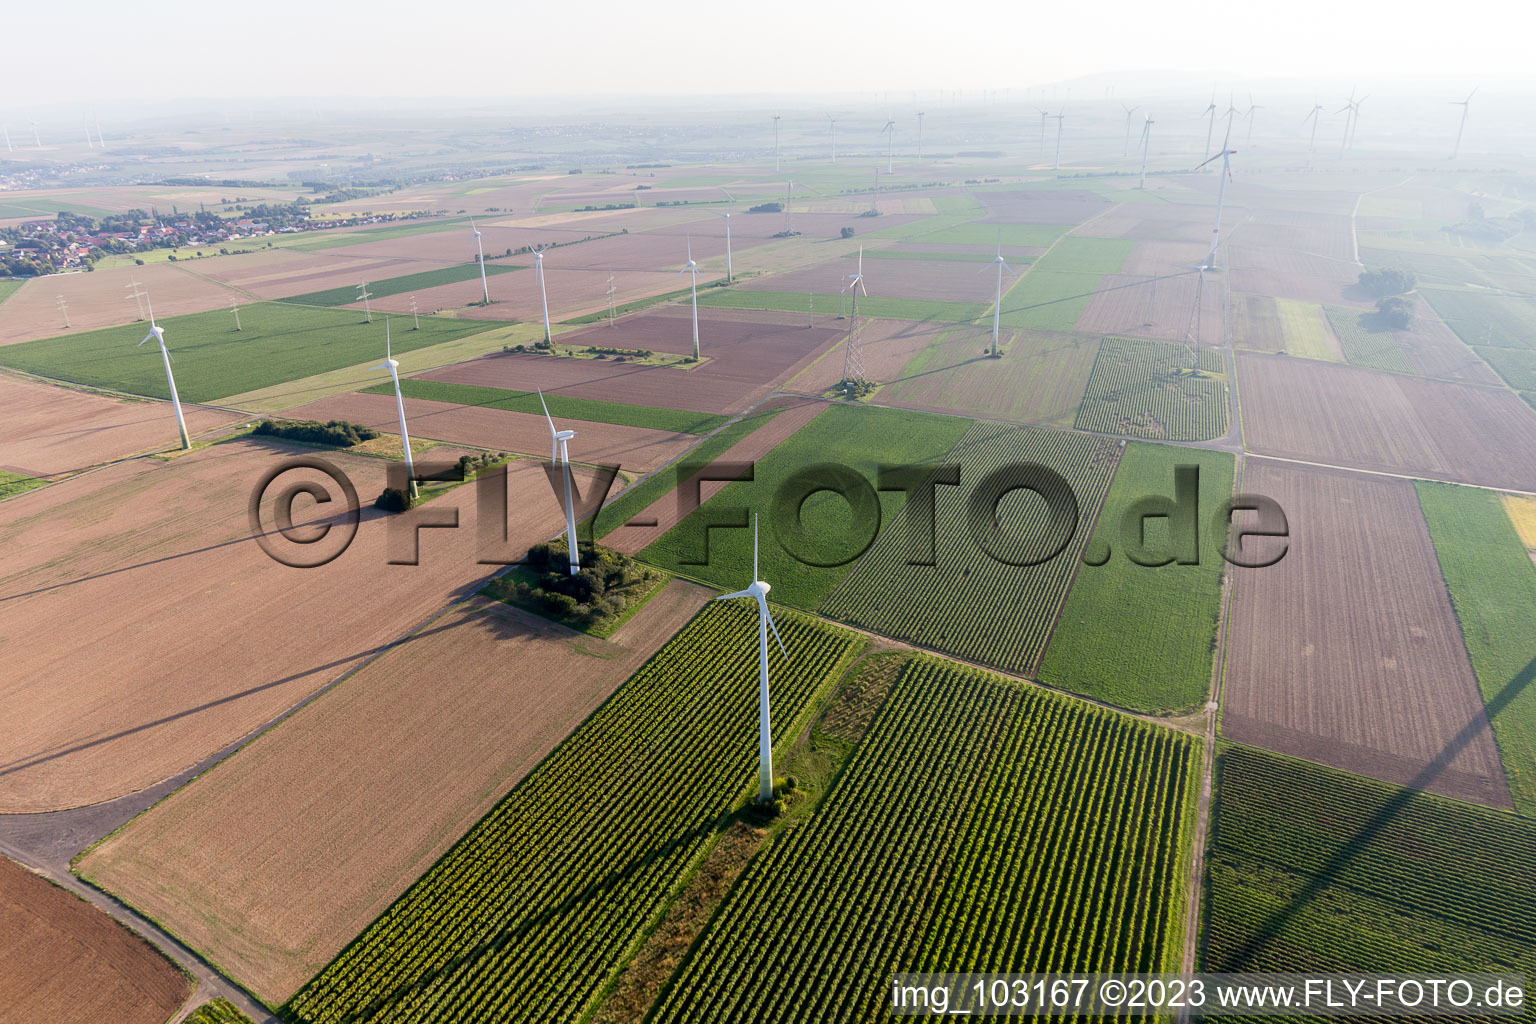 Wind turbines in Blödesheim in the state Rhineland-Palatinate, Germany